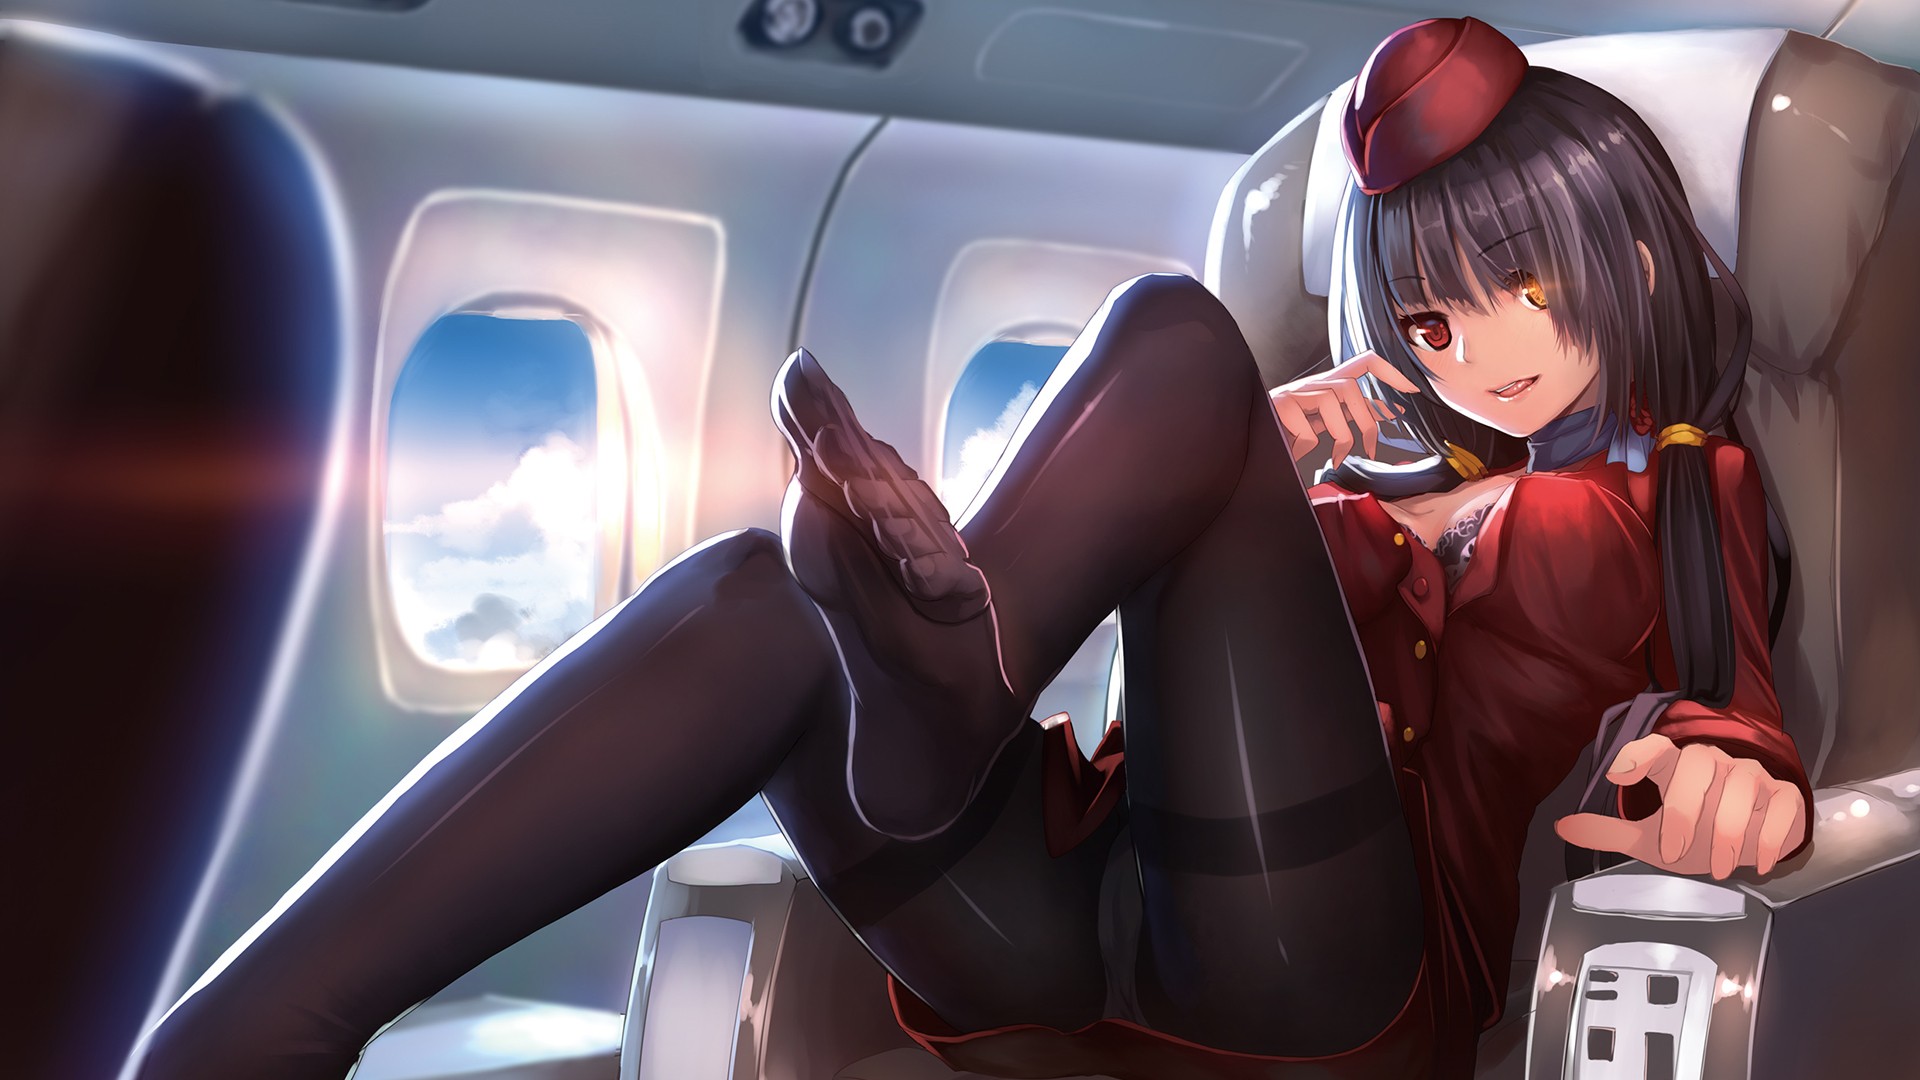 Anime 1920x1080 anime girls feet flight attendant airplane uniform pantyhose dark hair heterochromia Date A Live Tokisaki Kurumi artwork Weiyinji Xsk